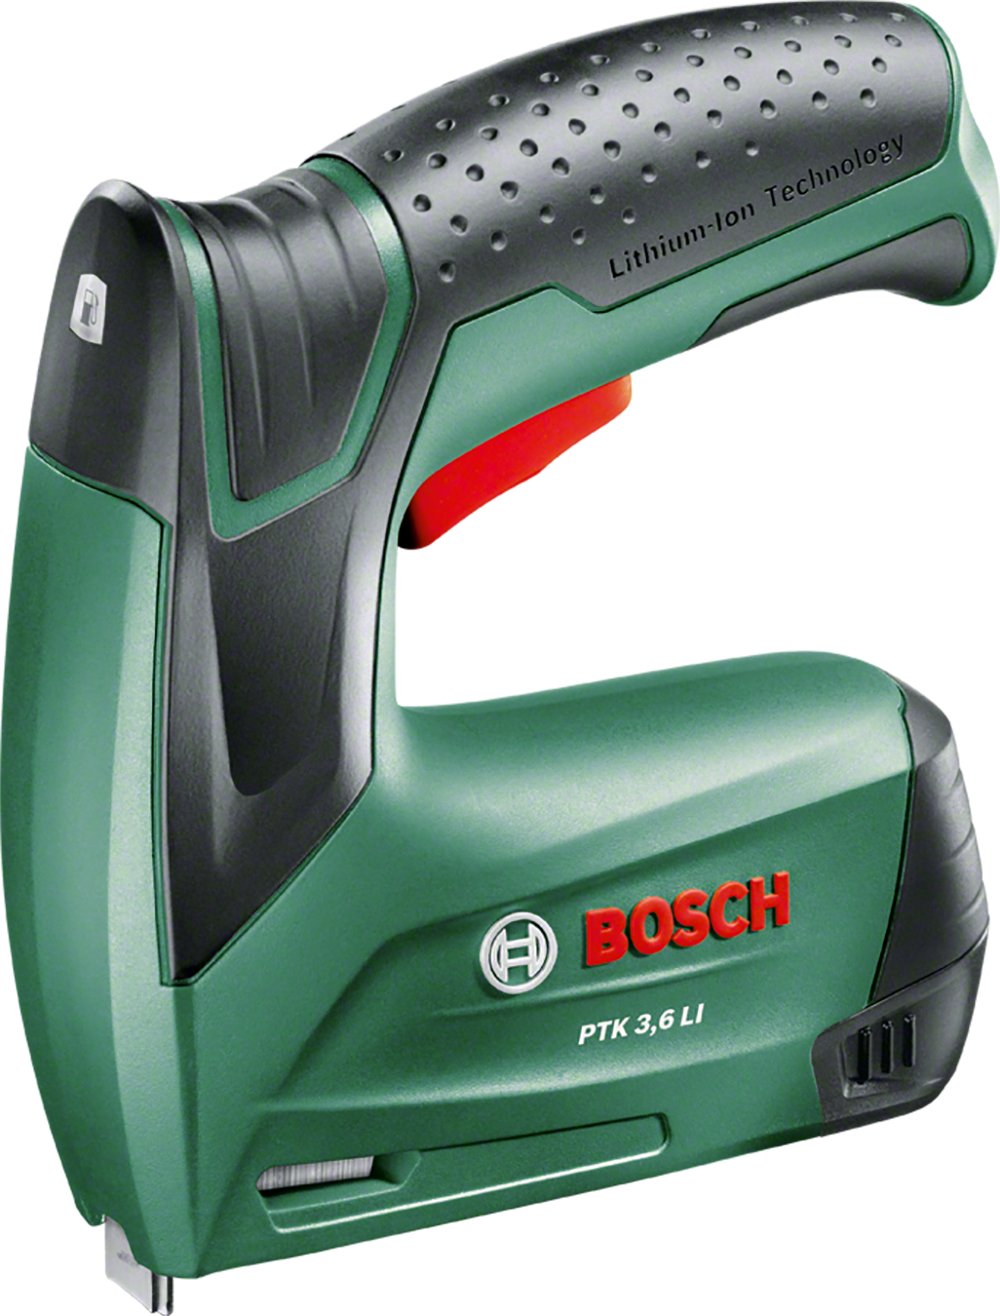 Bosch Cordless Tacker Staple Gun - 1000 Staples